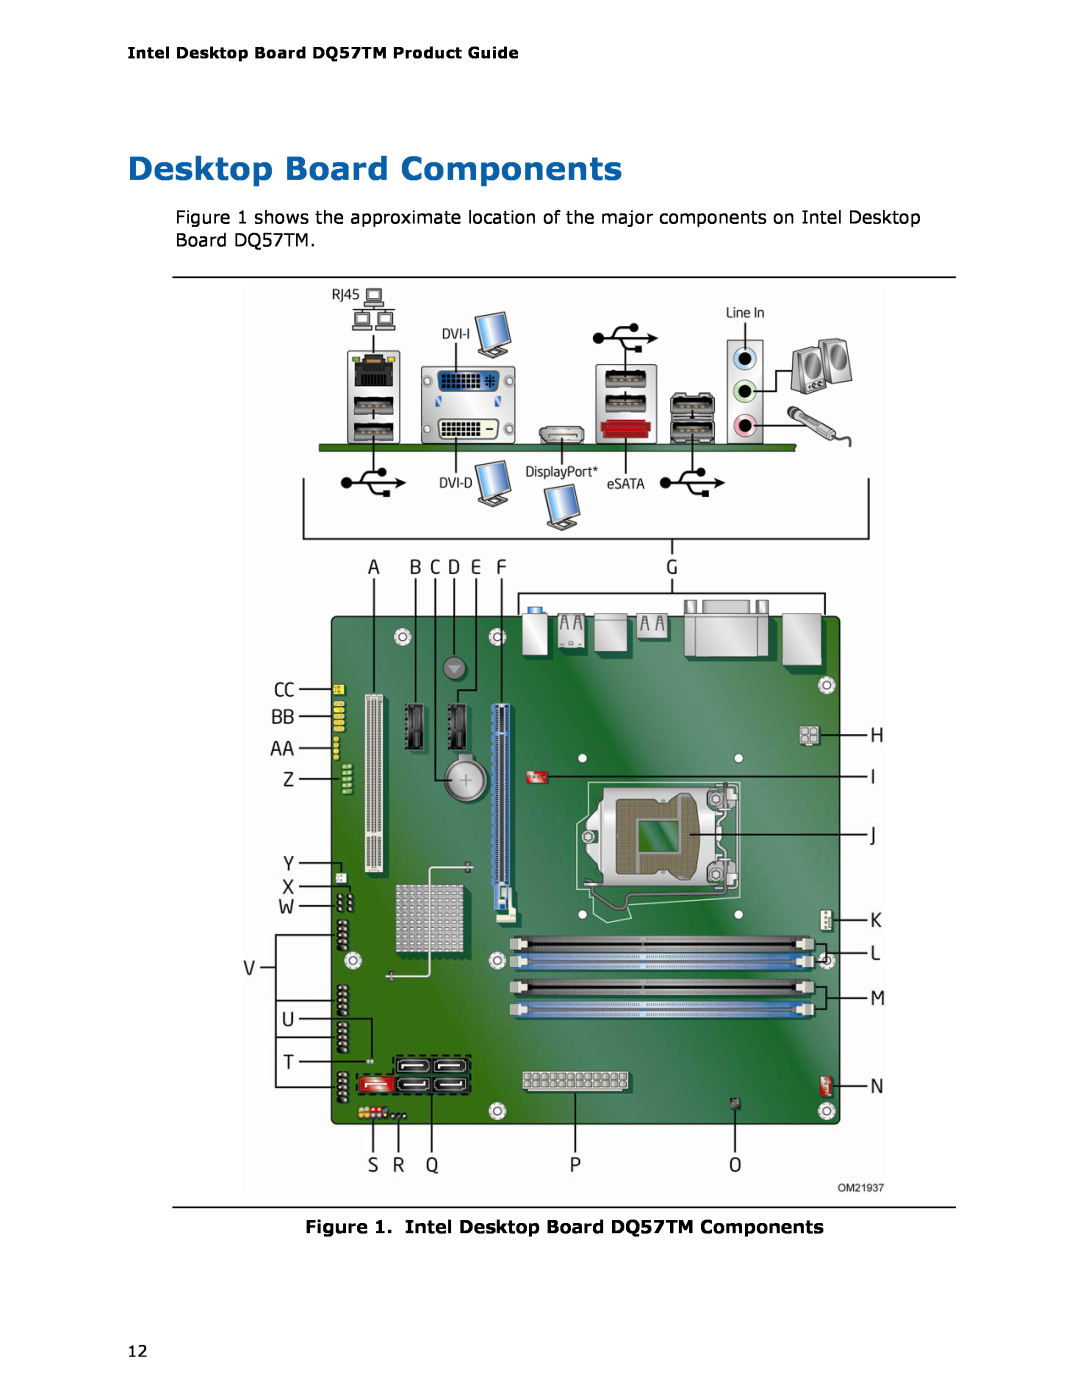 Intel manual Desktop Board Components, Intel Desktop Board DQ57TM Components 